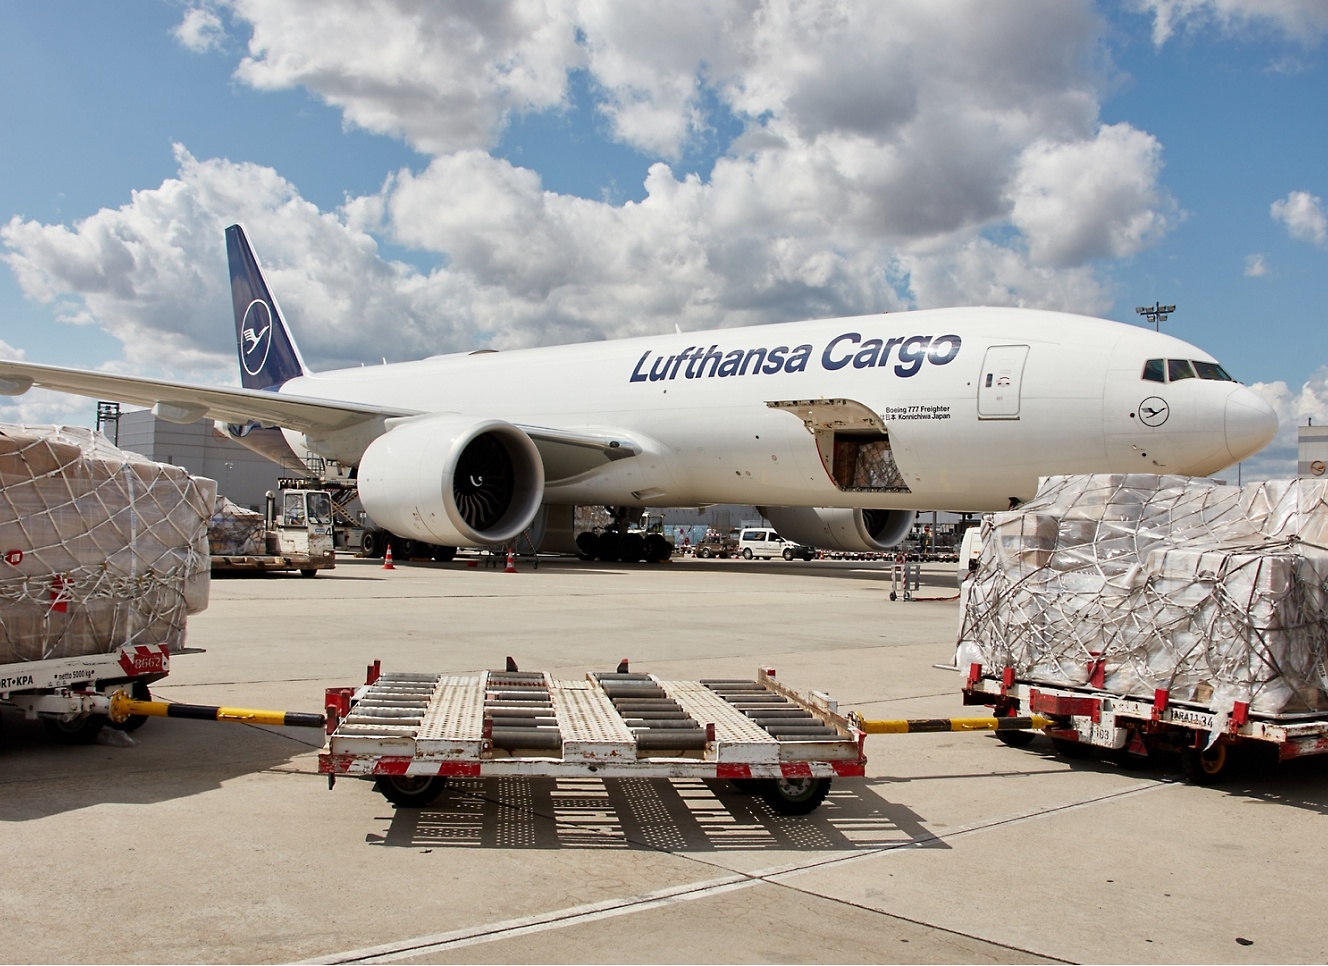 Image of Lufthansa Cargo Airplane